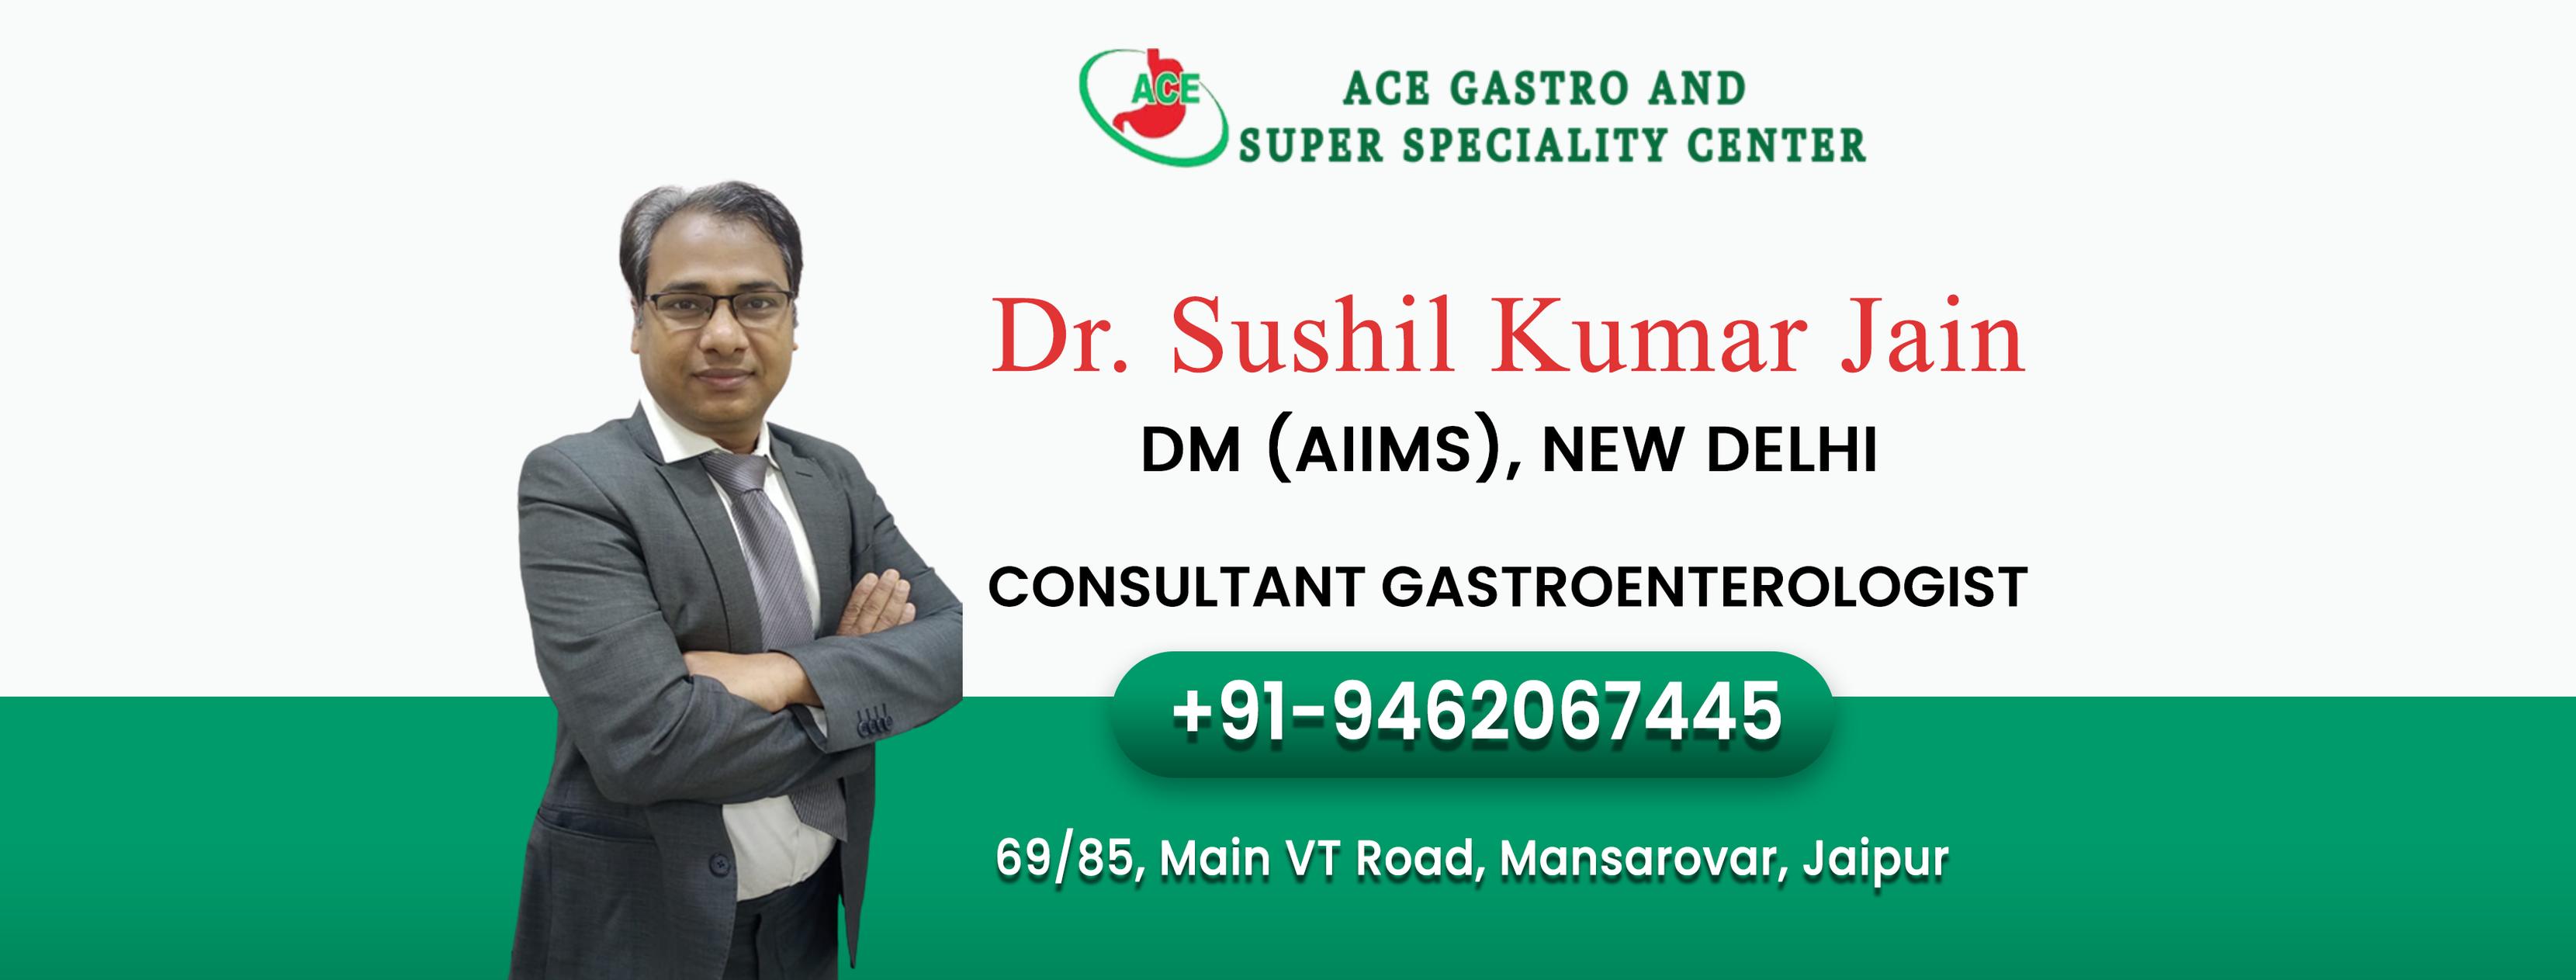 Image of Trust Dr Sushil Kumar Jain a renowned gastroenterology